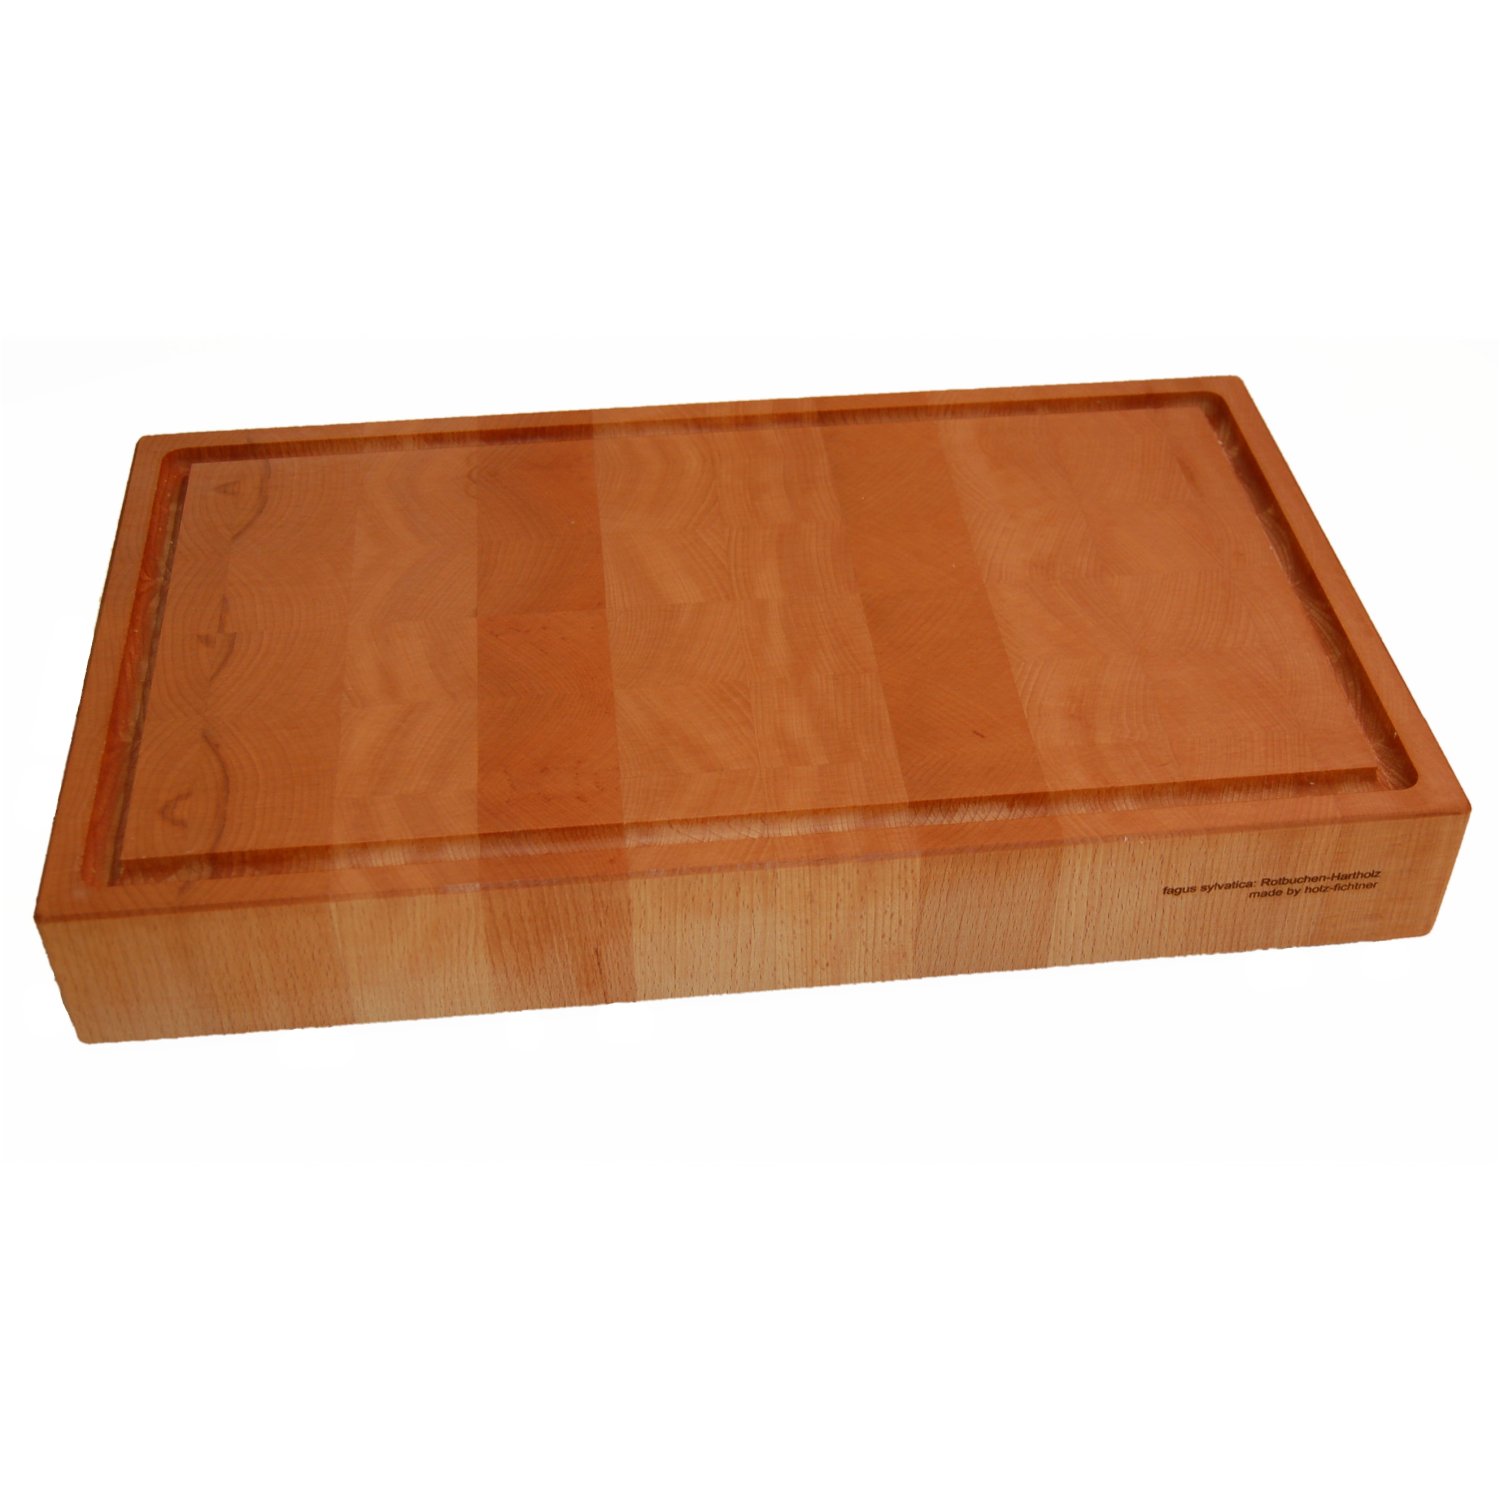 Cutting board made of hard beech wood